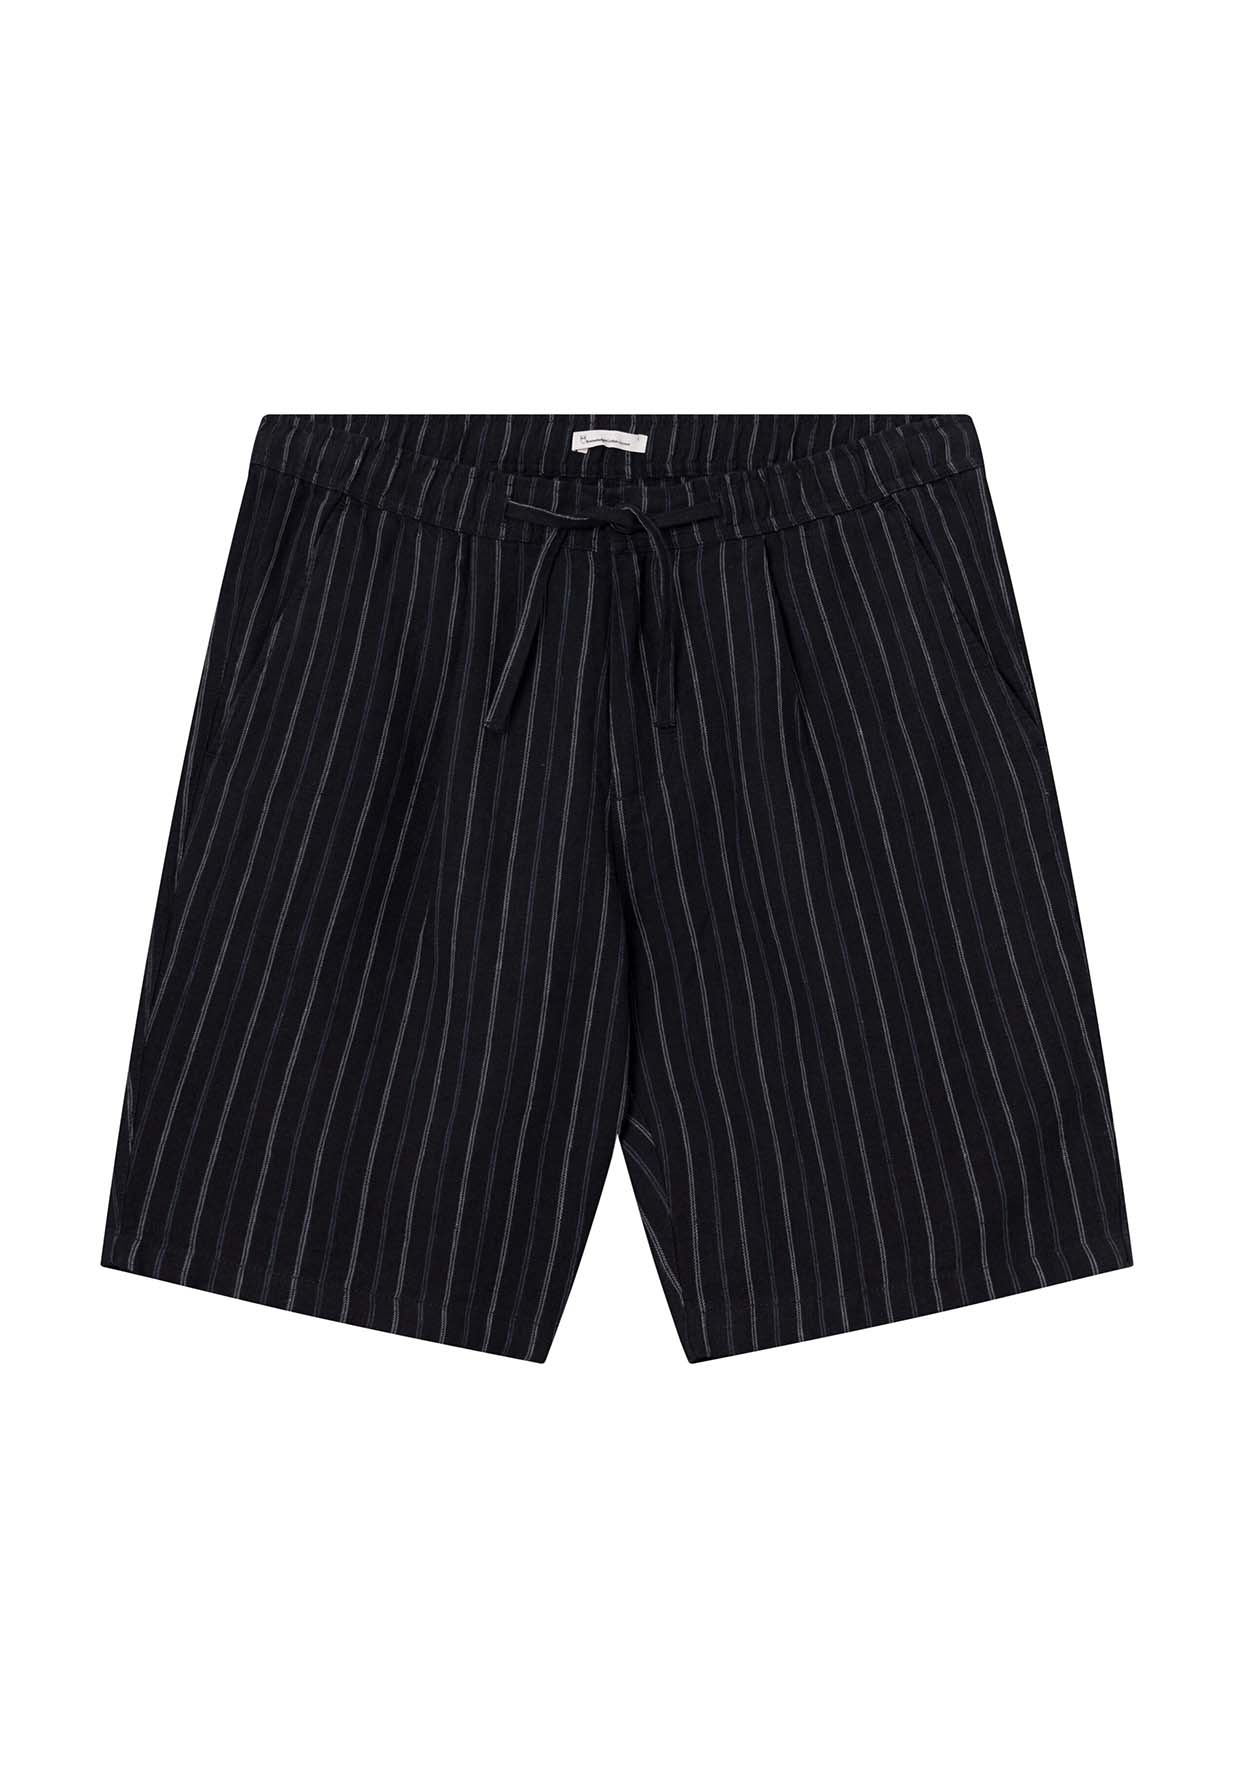 KNOWLEDGECOTTON APPAREL Loose Striped Shorts navy stripe M